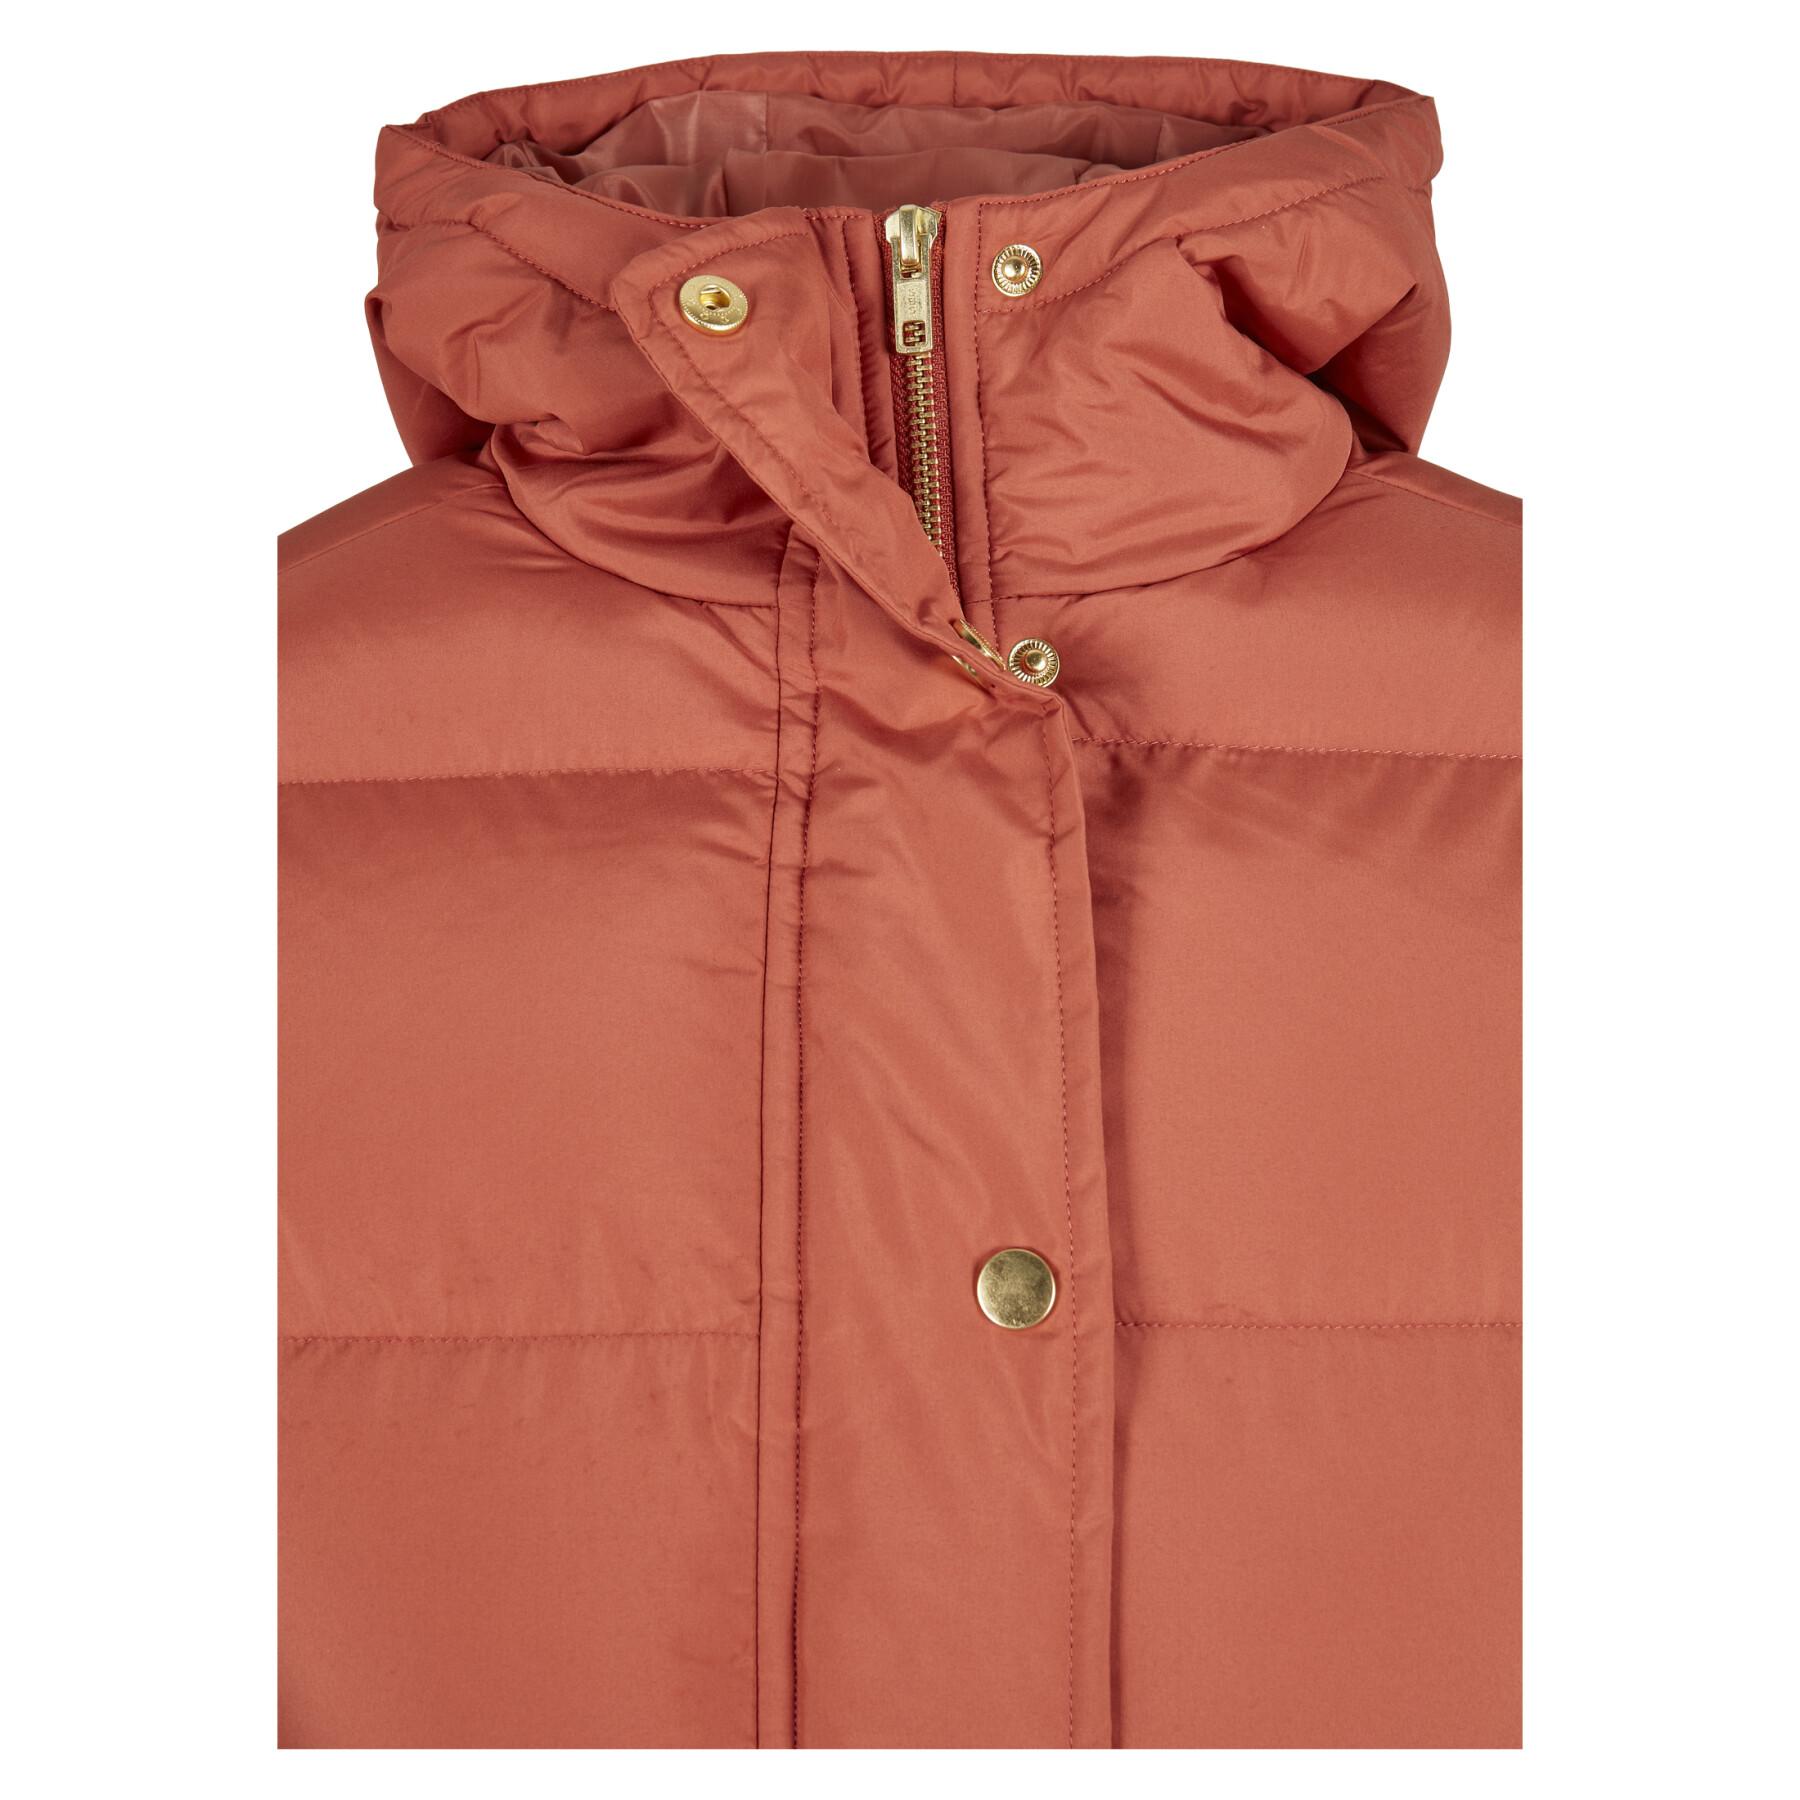 Women's jacket Urban Classics hooded puffer-large sizes